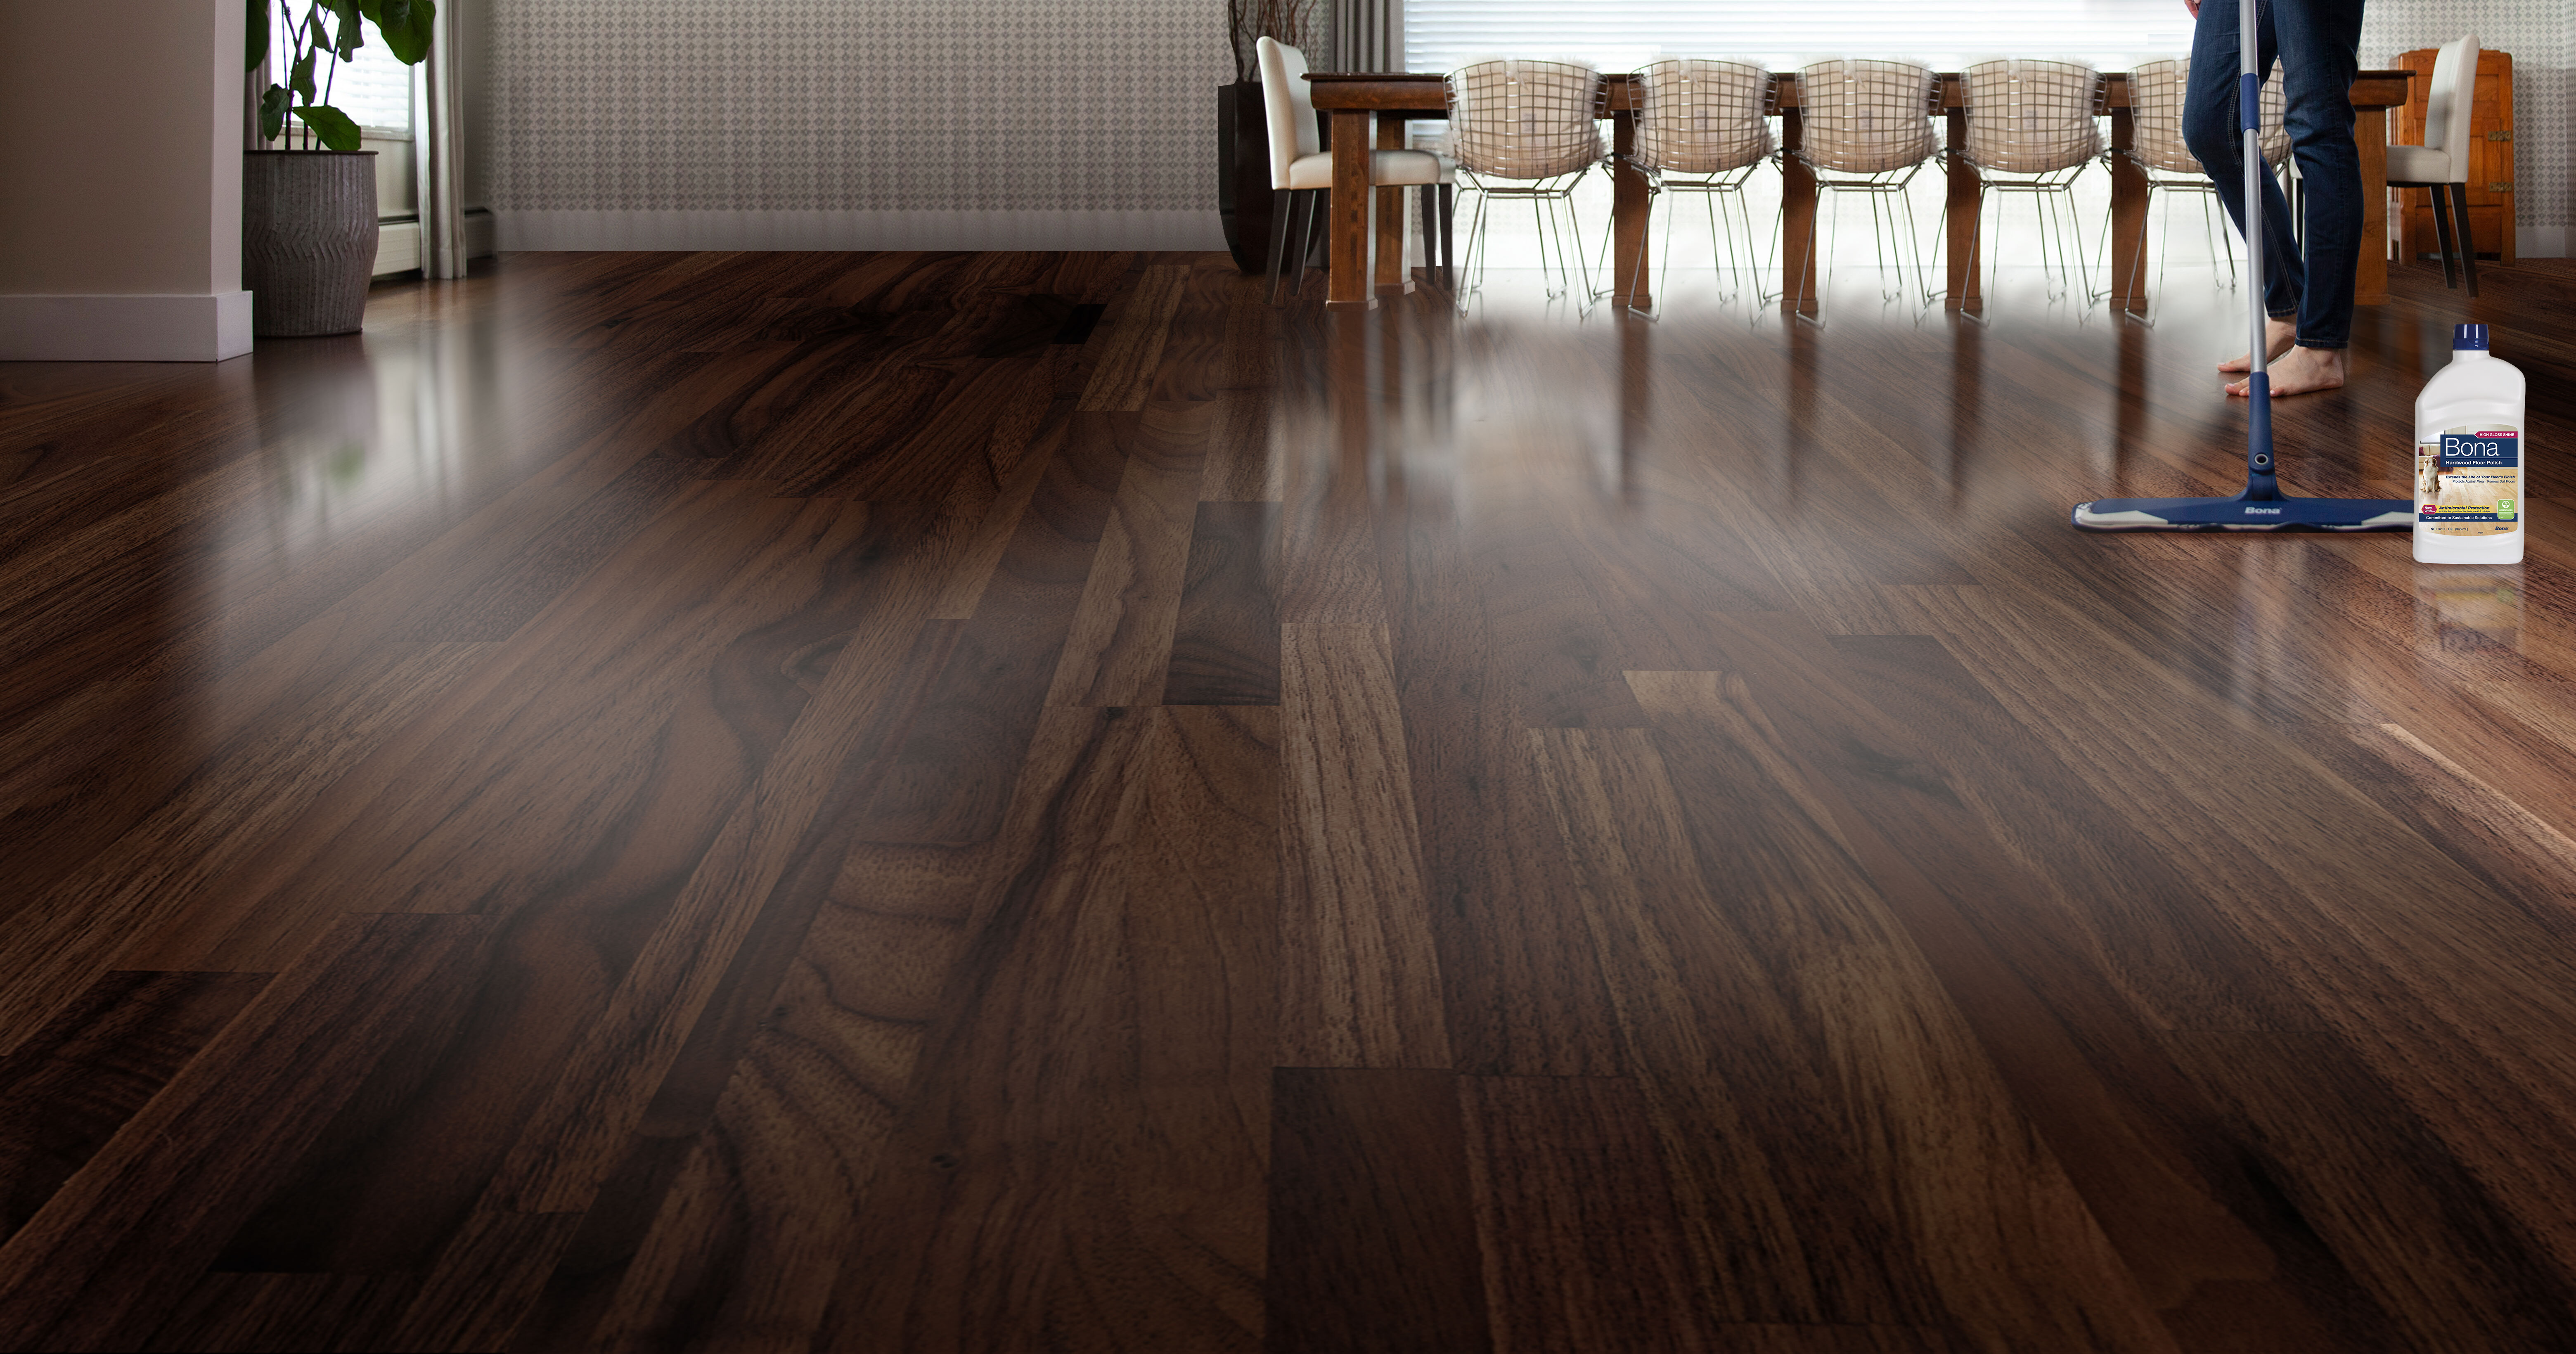 How To Polish Hardwood Floors Do S And, How To Clean Cloudy Hardwood Floors